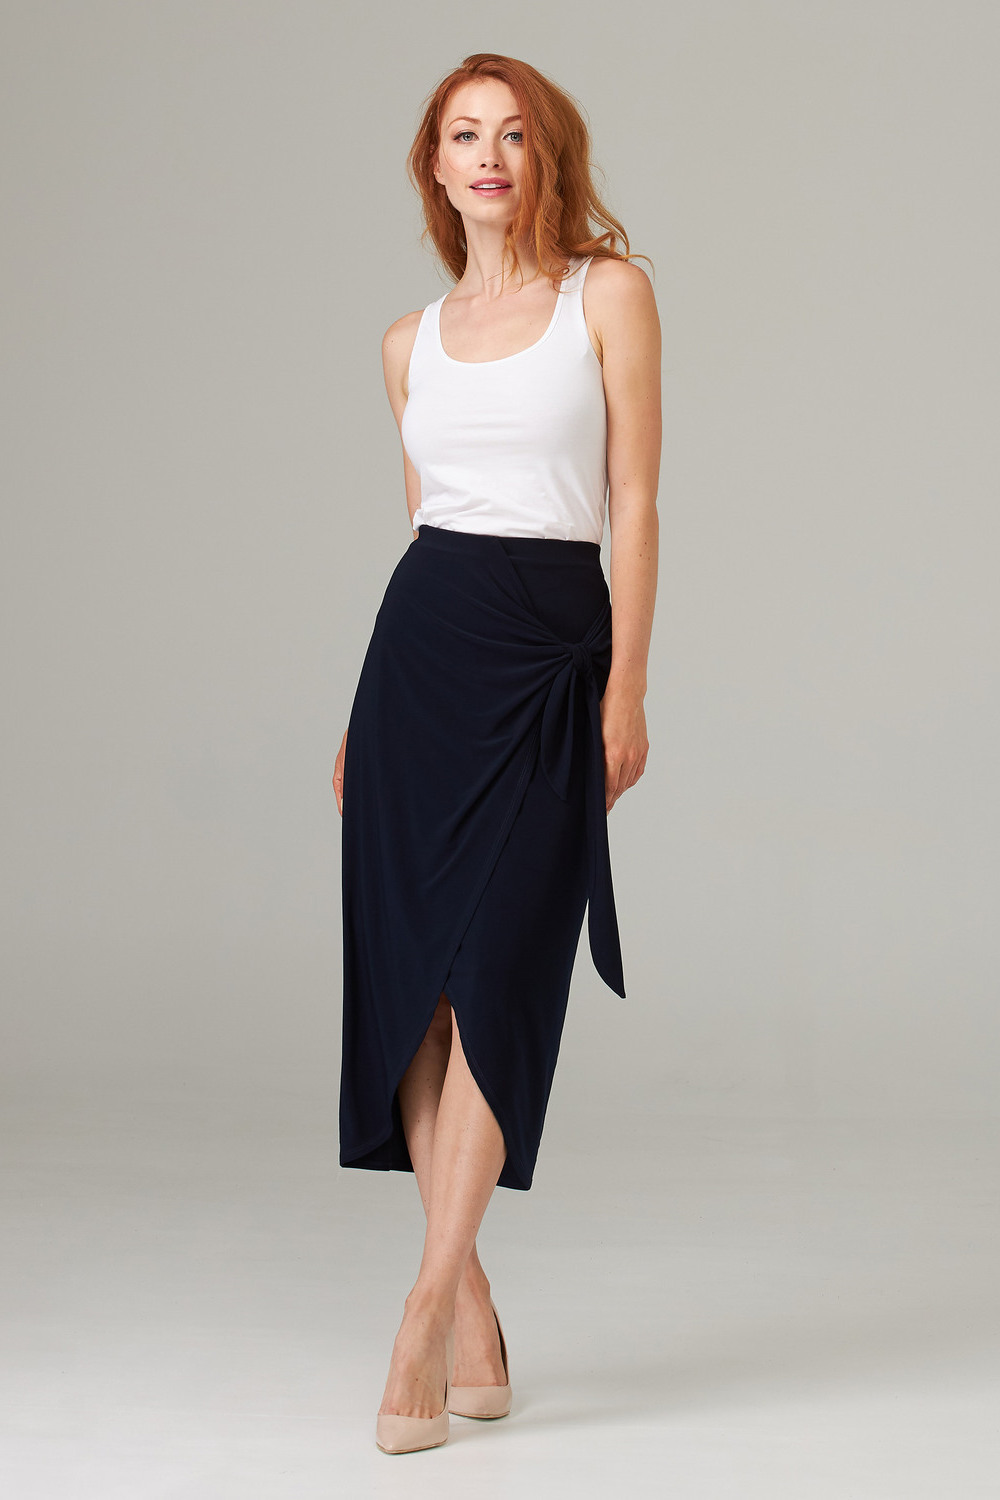 Joseph Ribkoff Skirt Style 203176. Midnight Blue